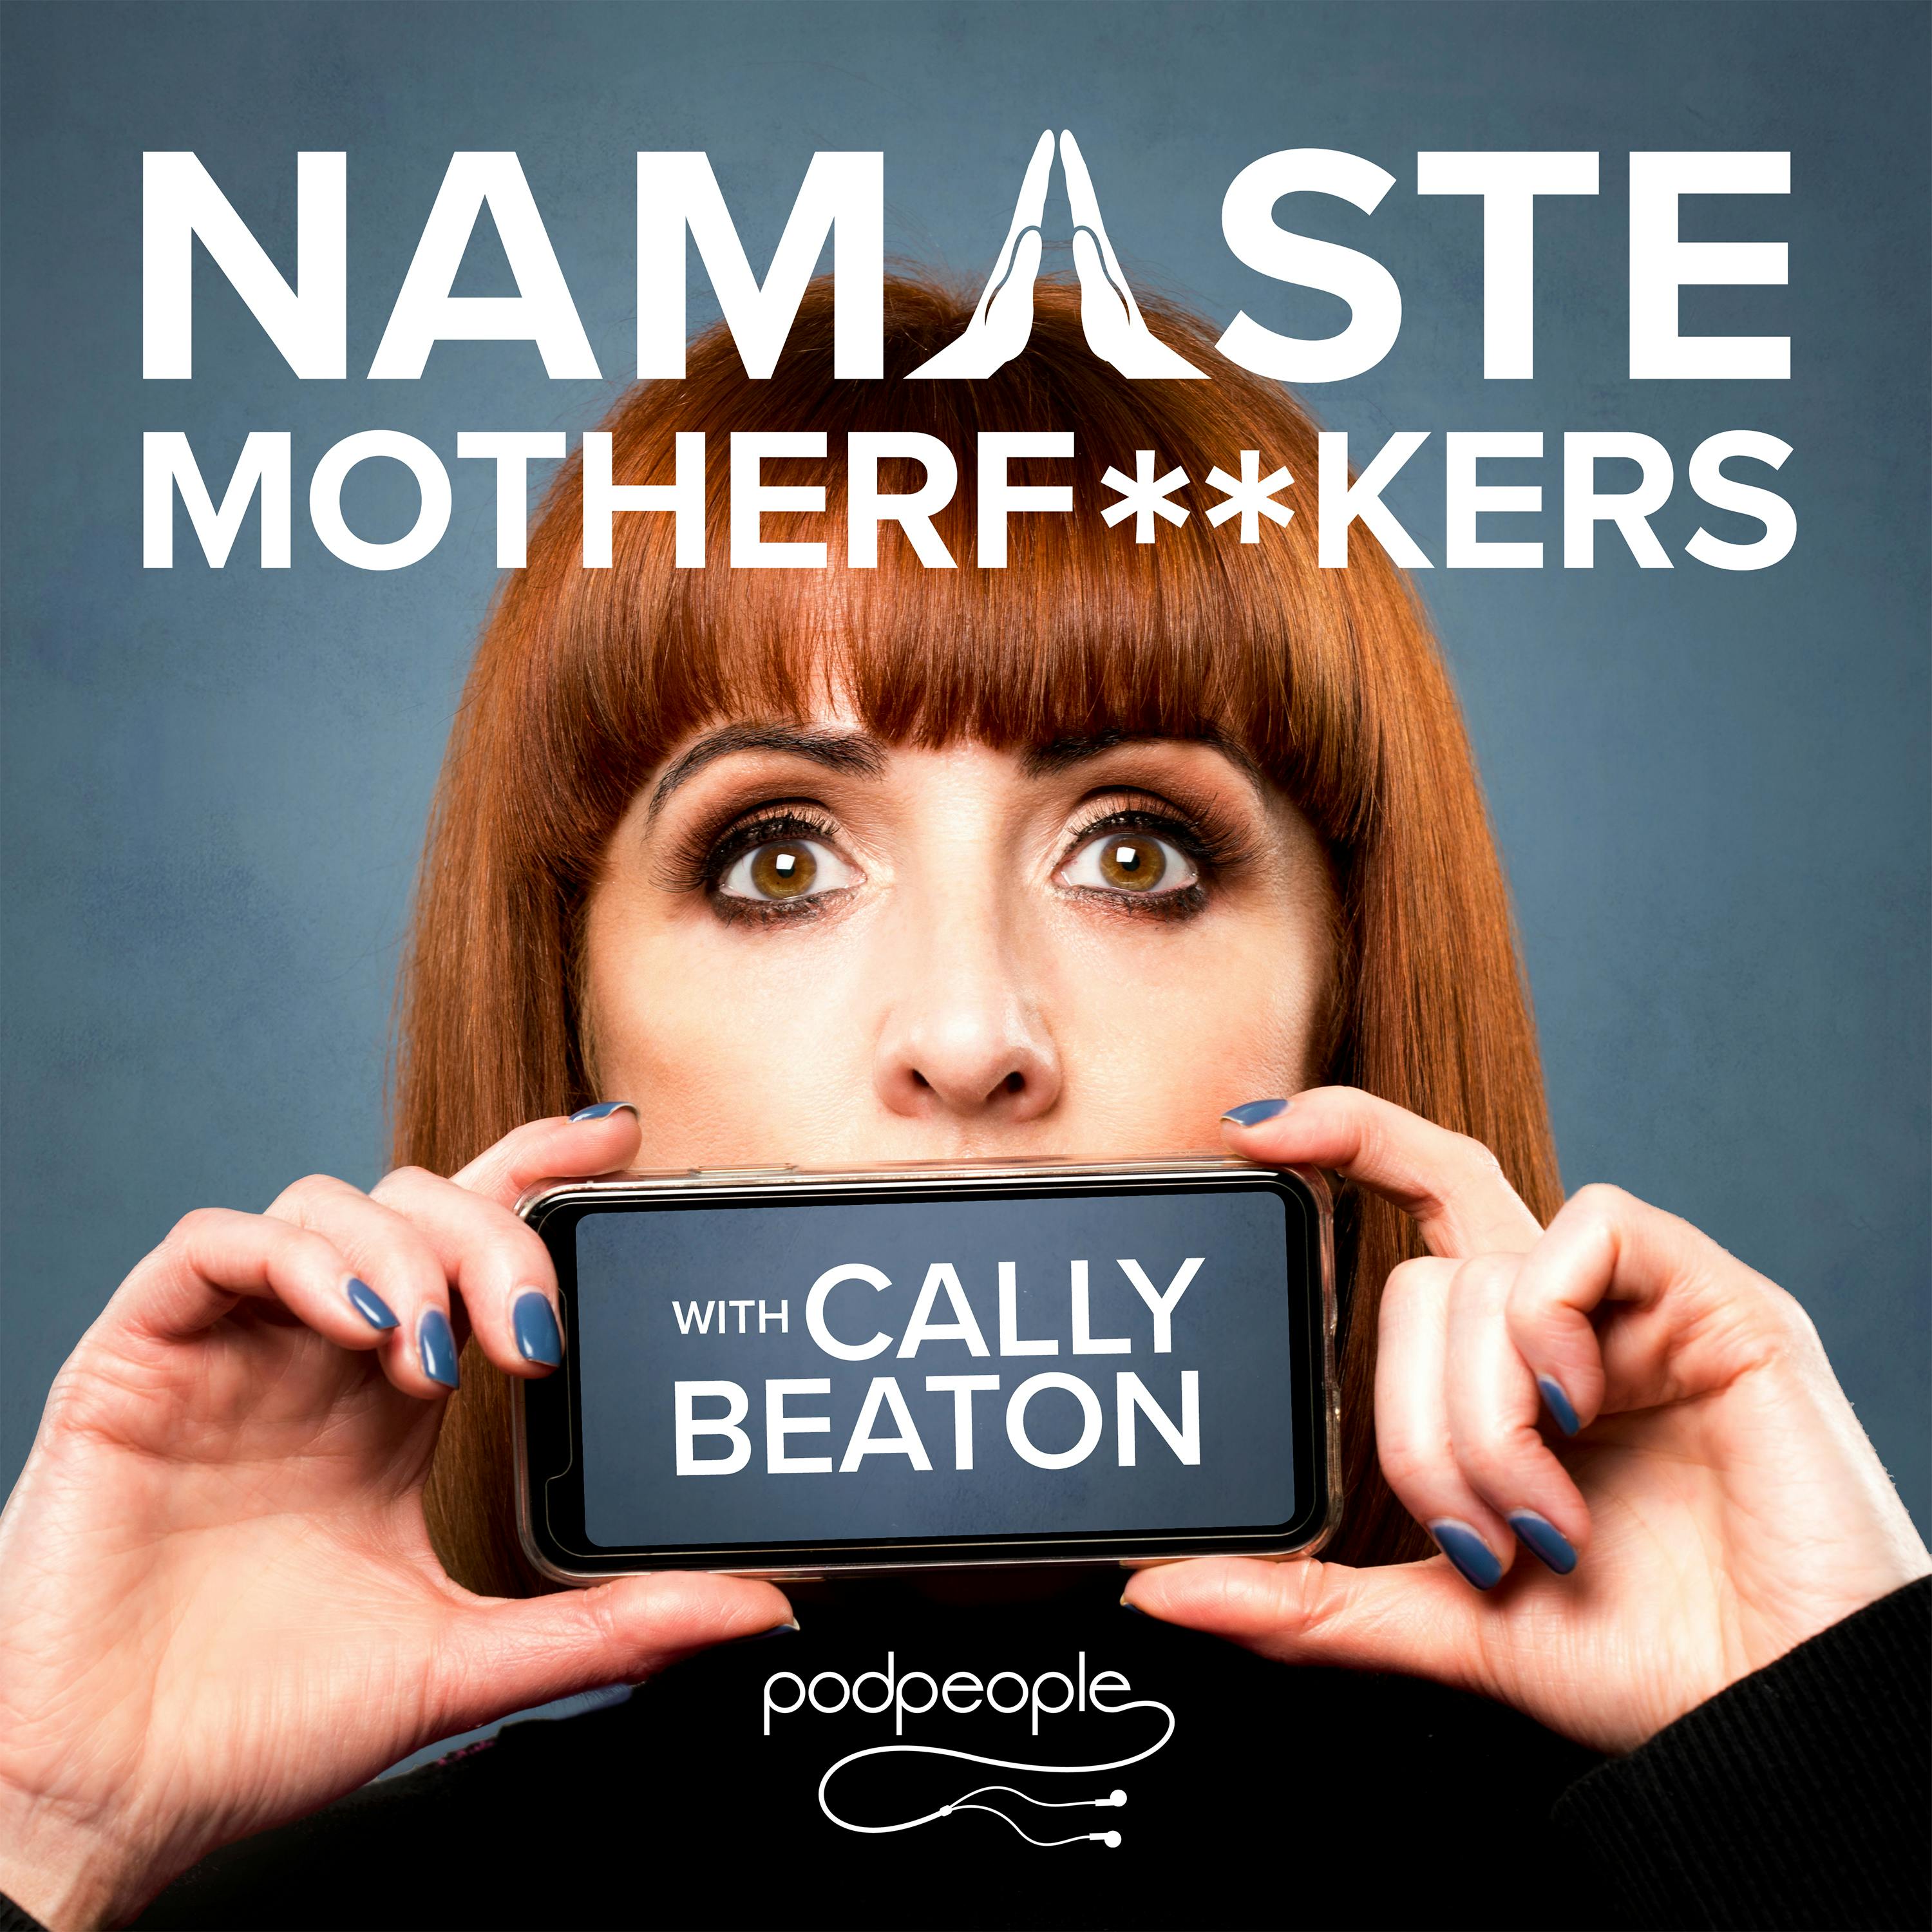 Namaste Motherf**kers podcast show image